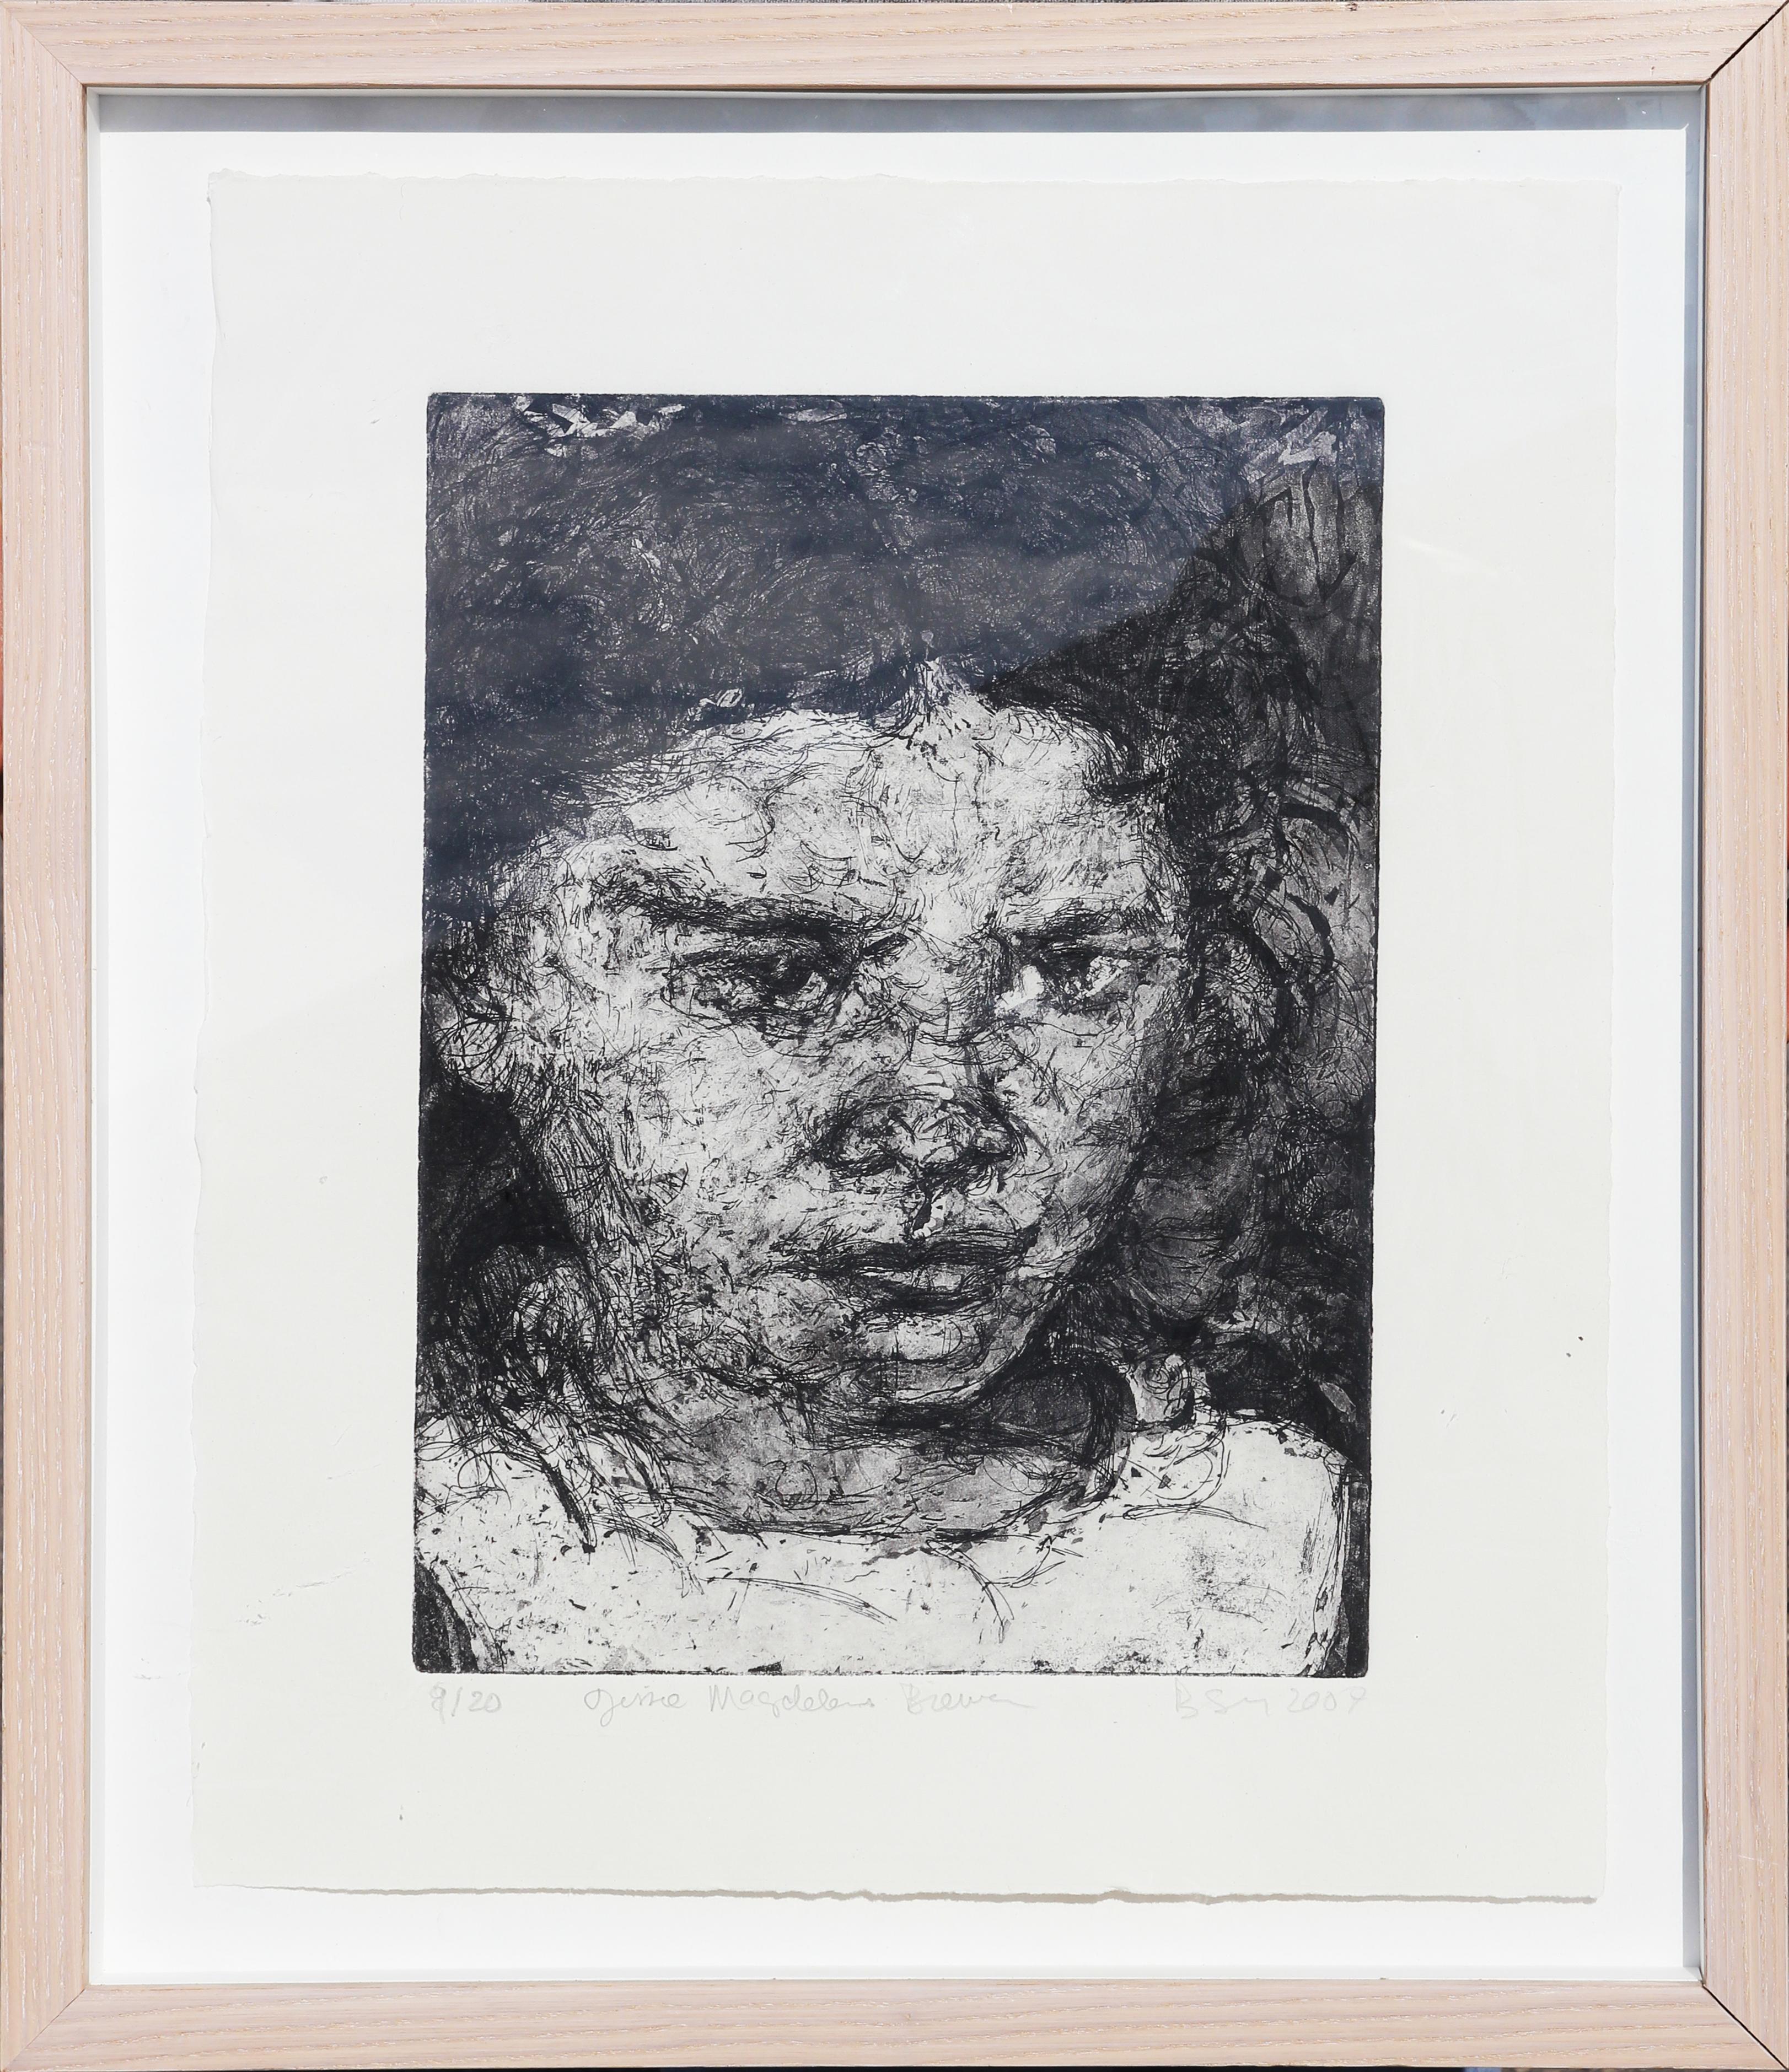 Beth Secor Portrait Print - Black and White Figurative Print of a Woman 9/20